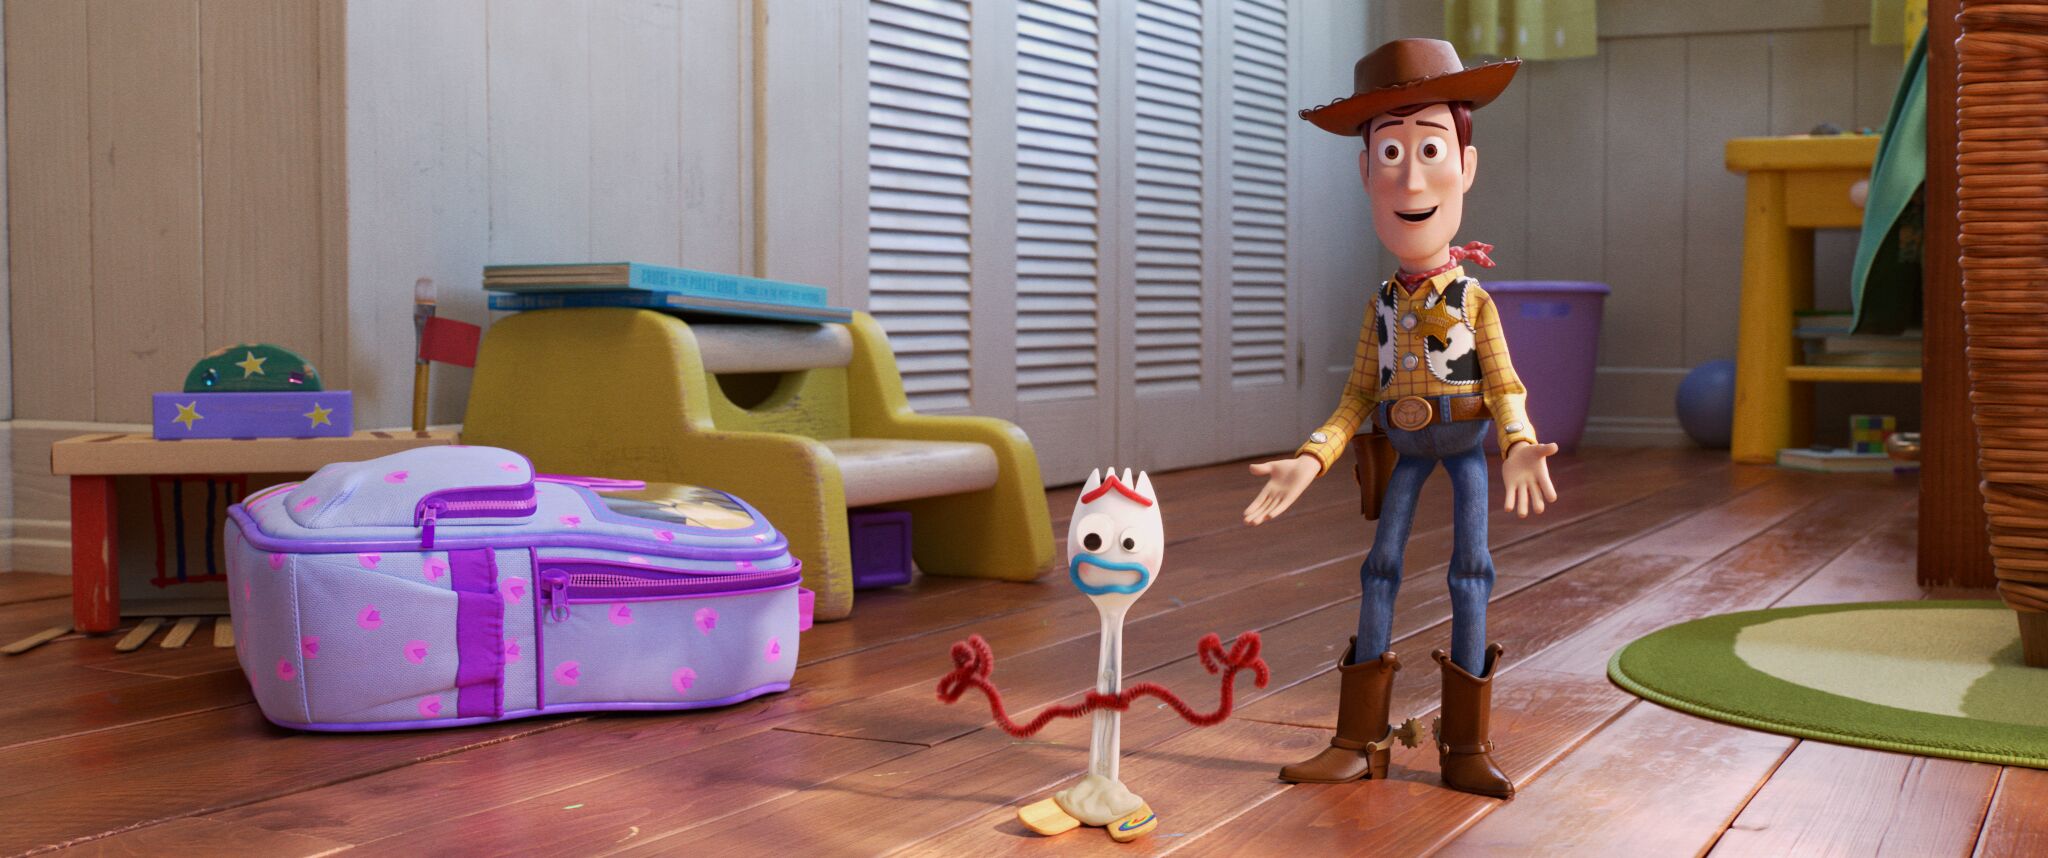 toy story 4 woody forky pixar cinema film recensione